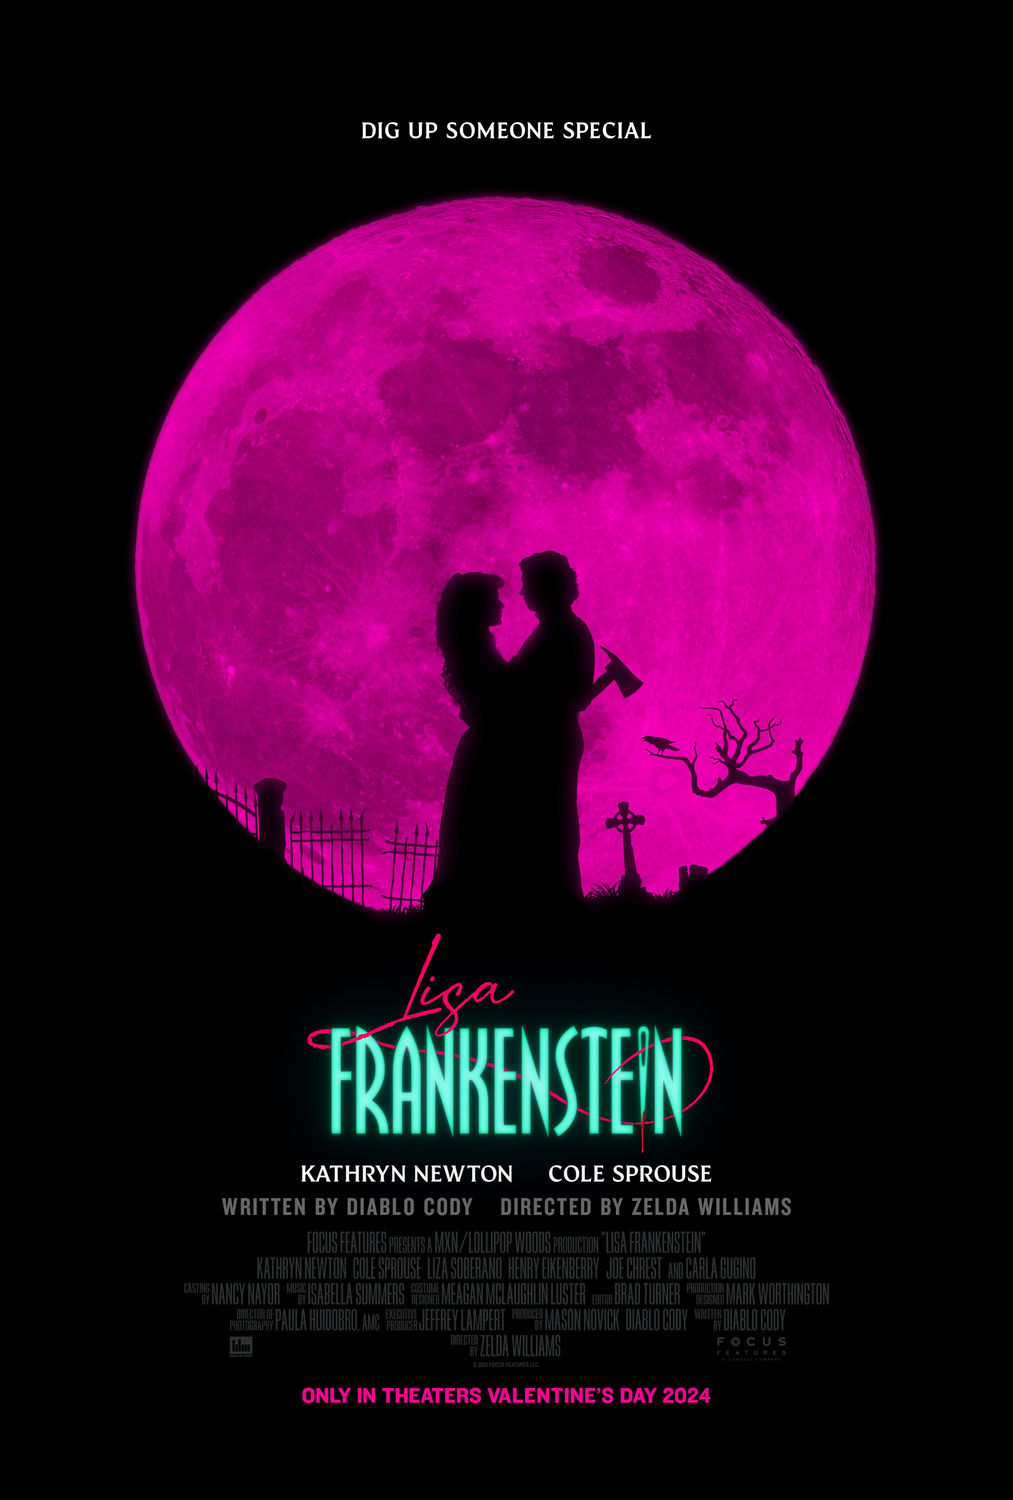 Lisa Frankenstein review: A Joyfully Silly Love Letter to Gothic Horror